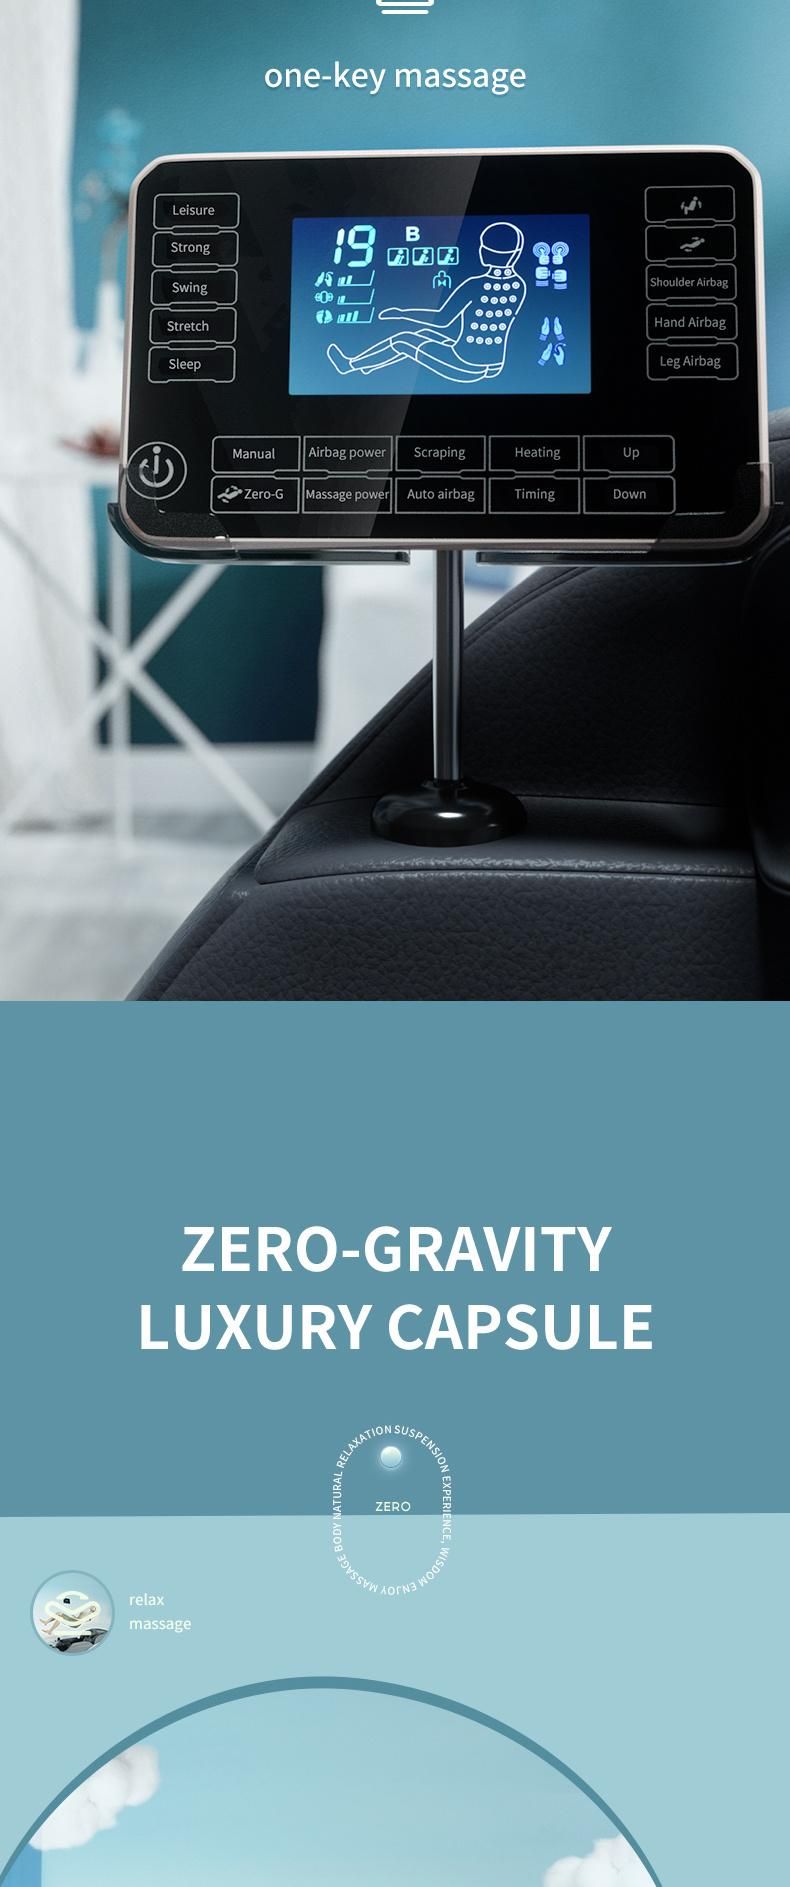 Jare Rh7600 Luxury Home Special Modern Reclining Foot Massager Zero Gravity Massage Chair